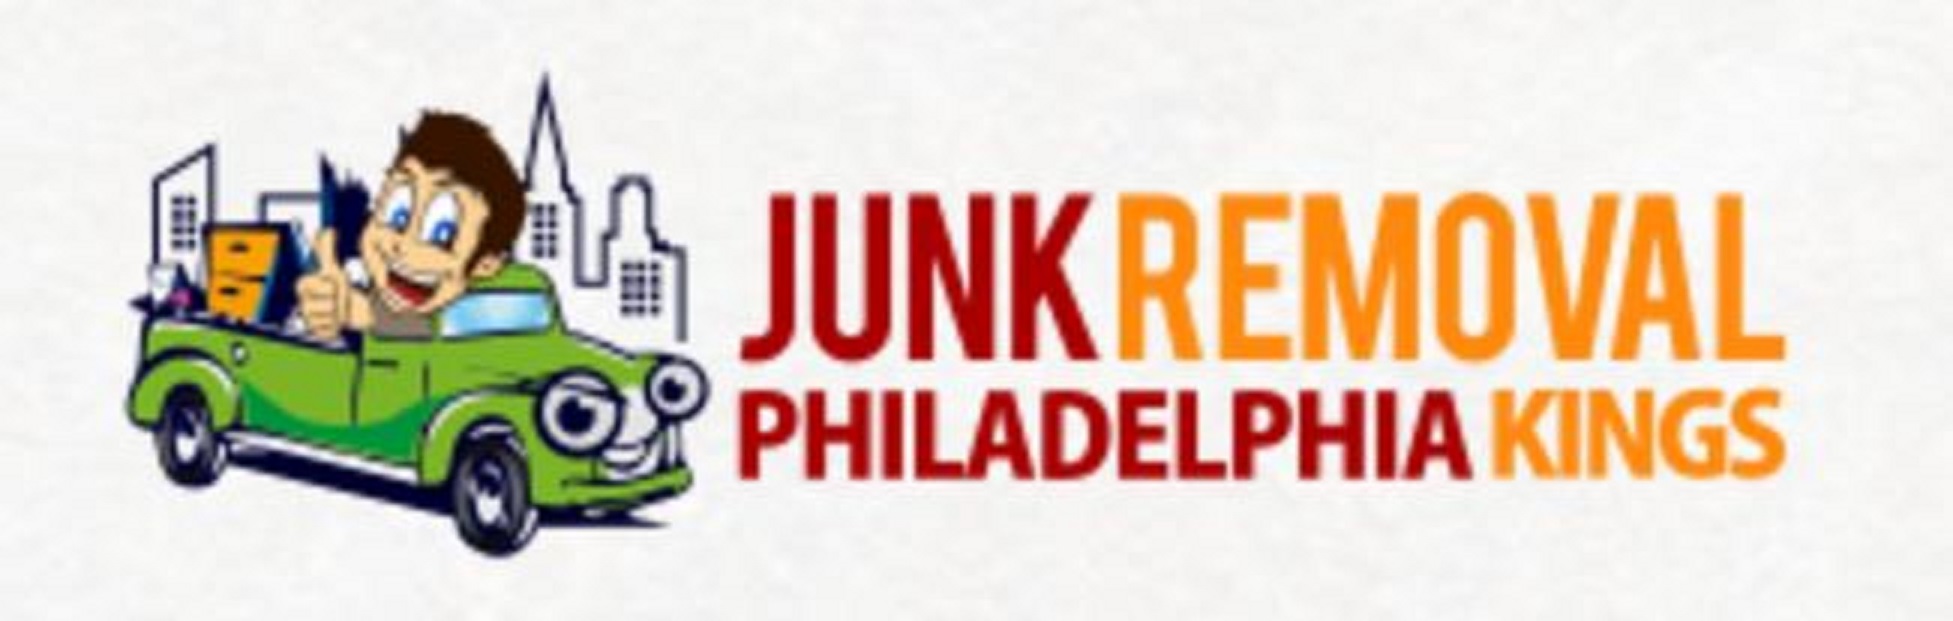 Junk Removal Philadelphia Kings's Logo